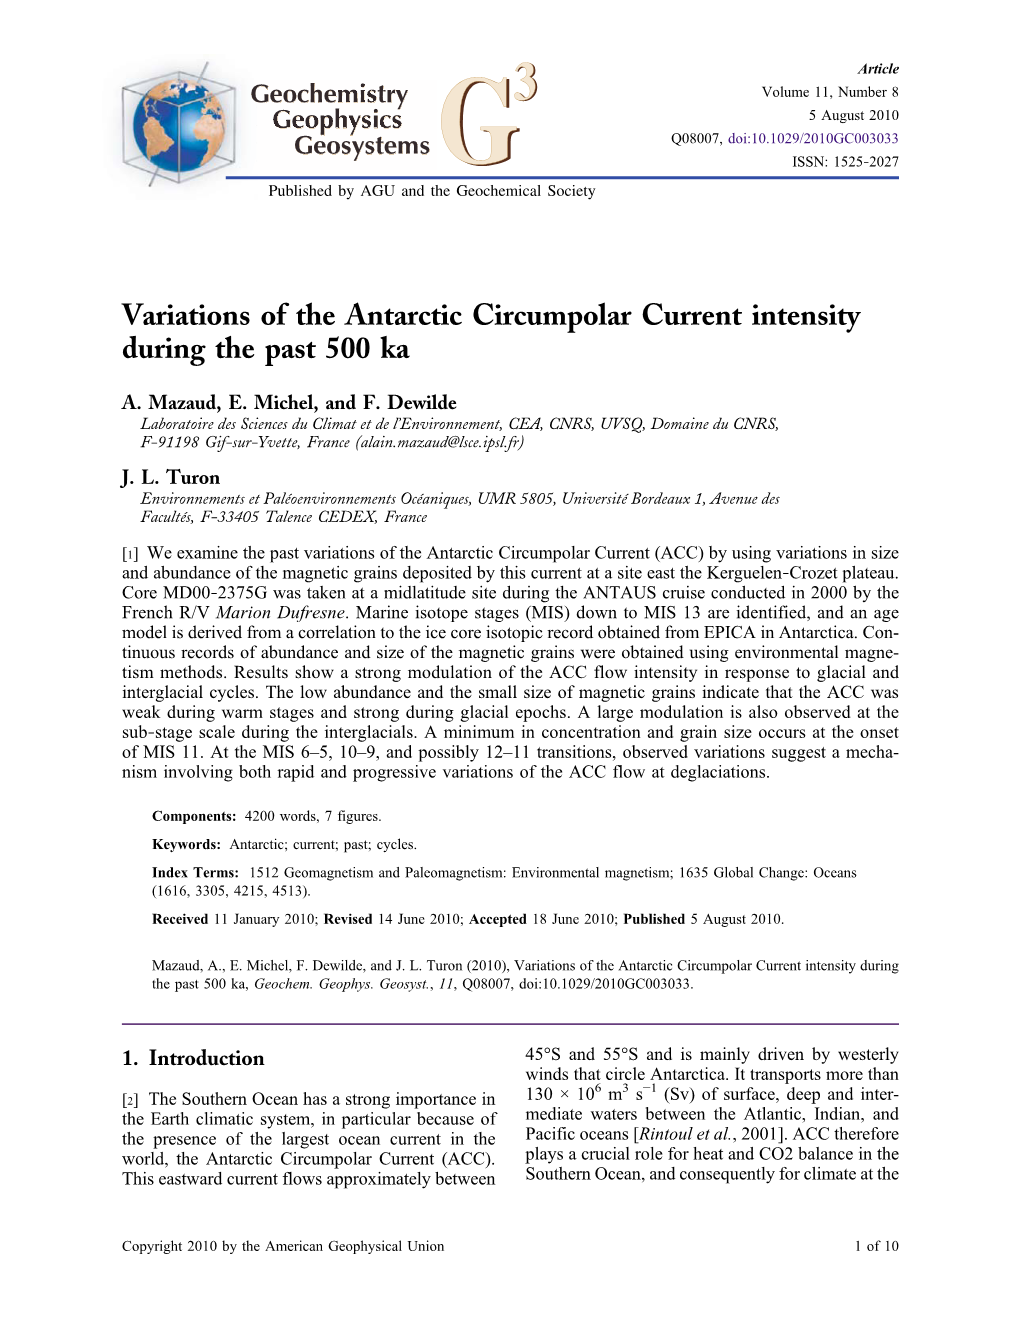 Variations of the Antarctic Circumpolar Current Intensity During the Past 500 Ka